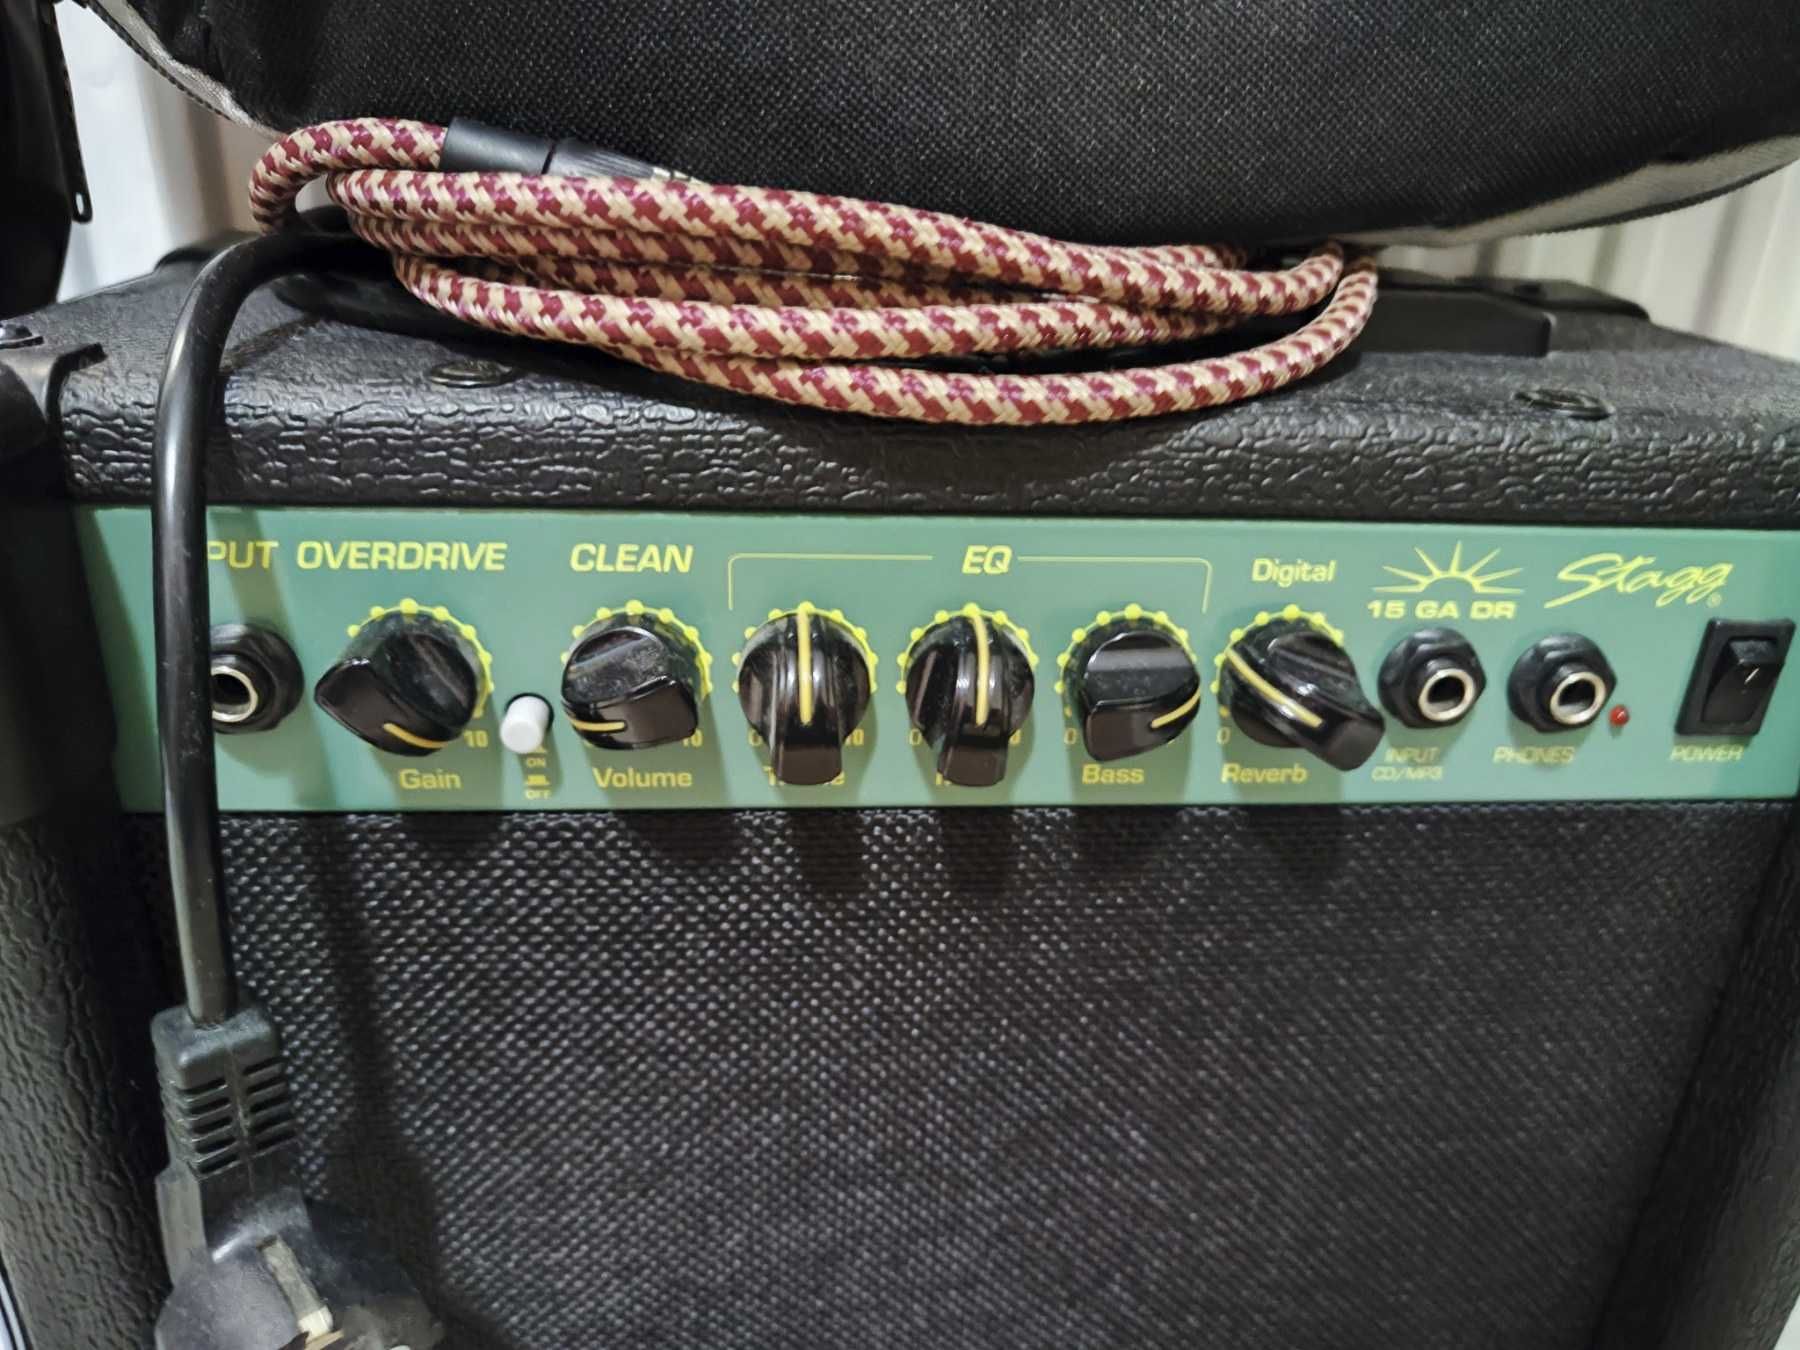 Електрическа китара STAGG S300-RDS в комплект с кубе, калъф и кабел